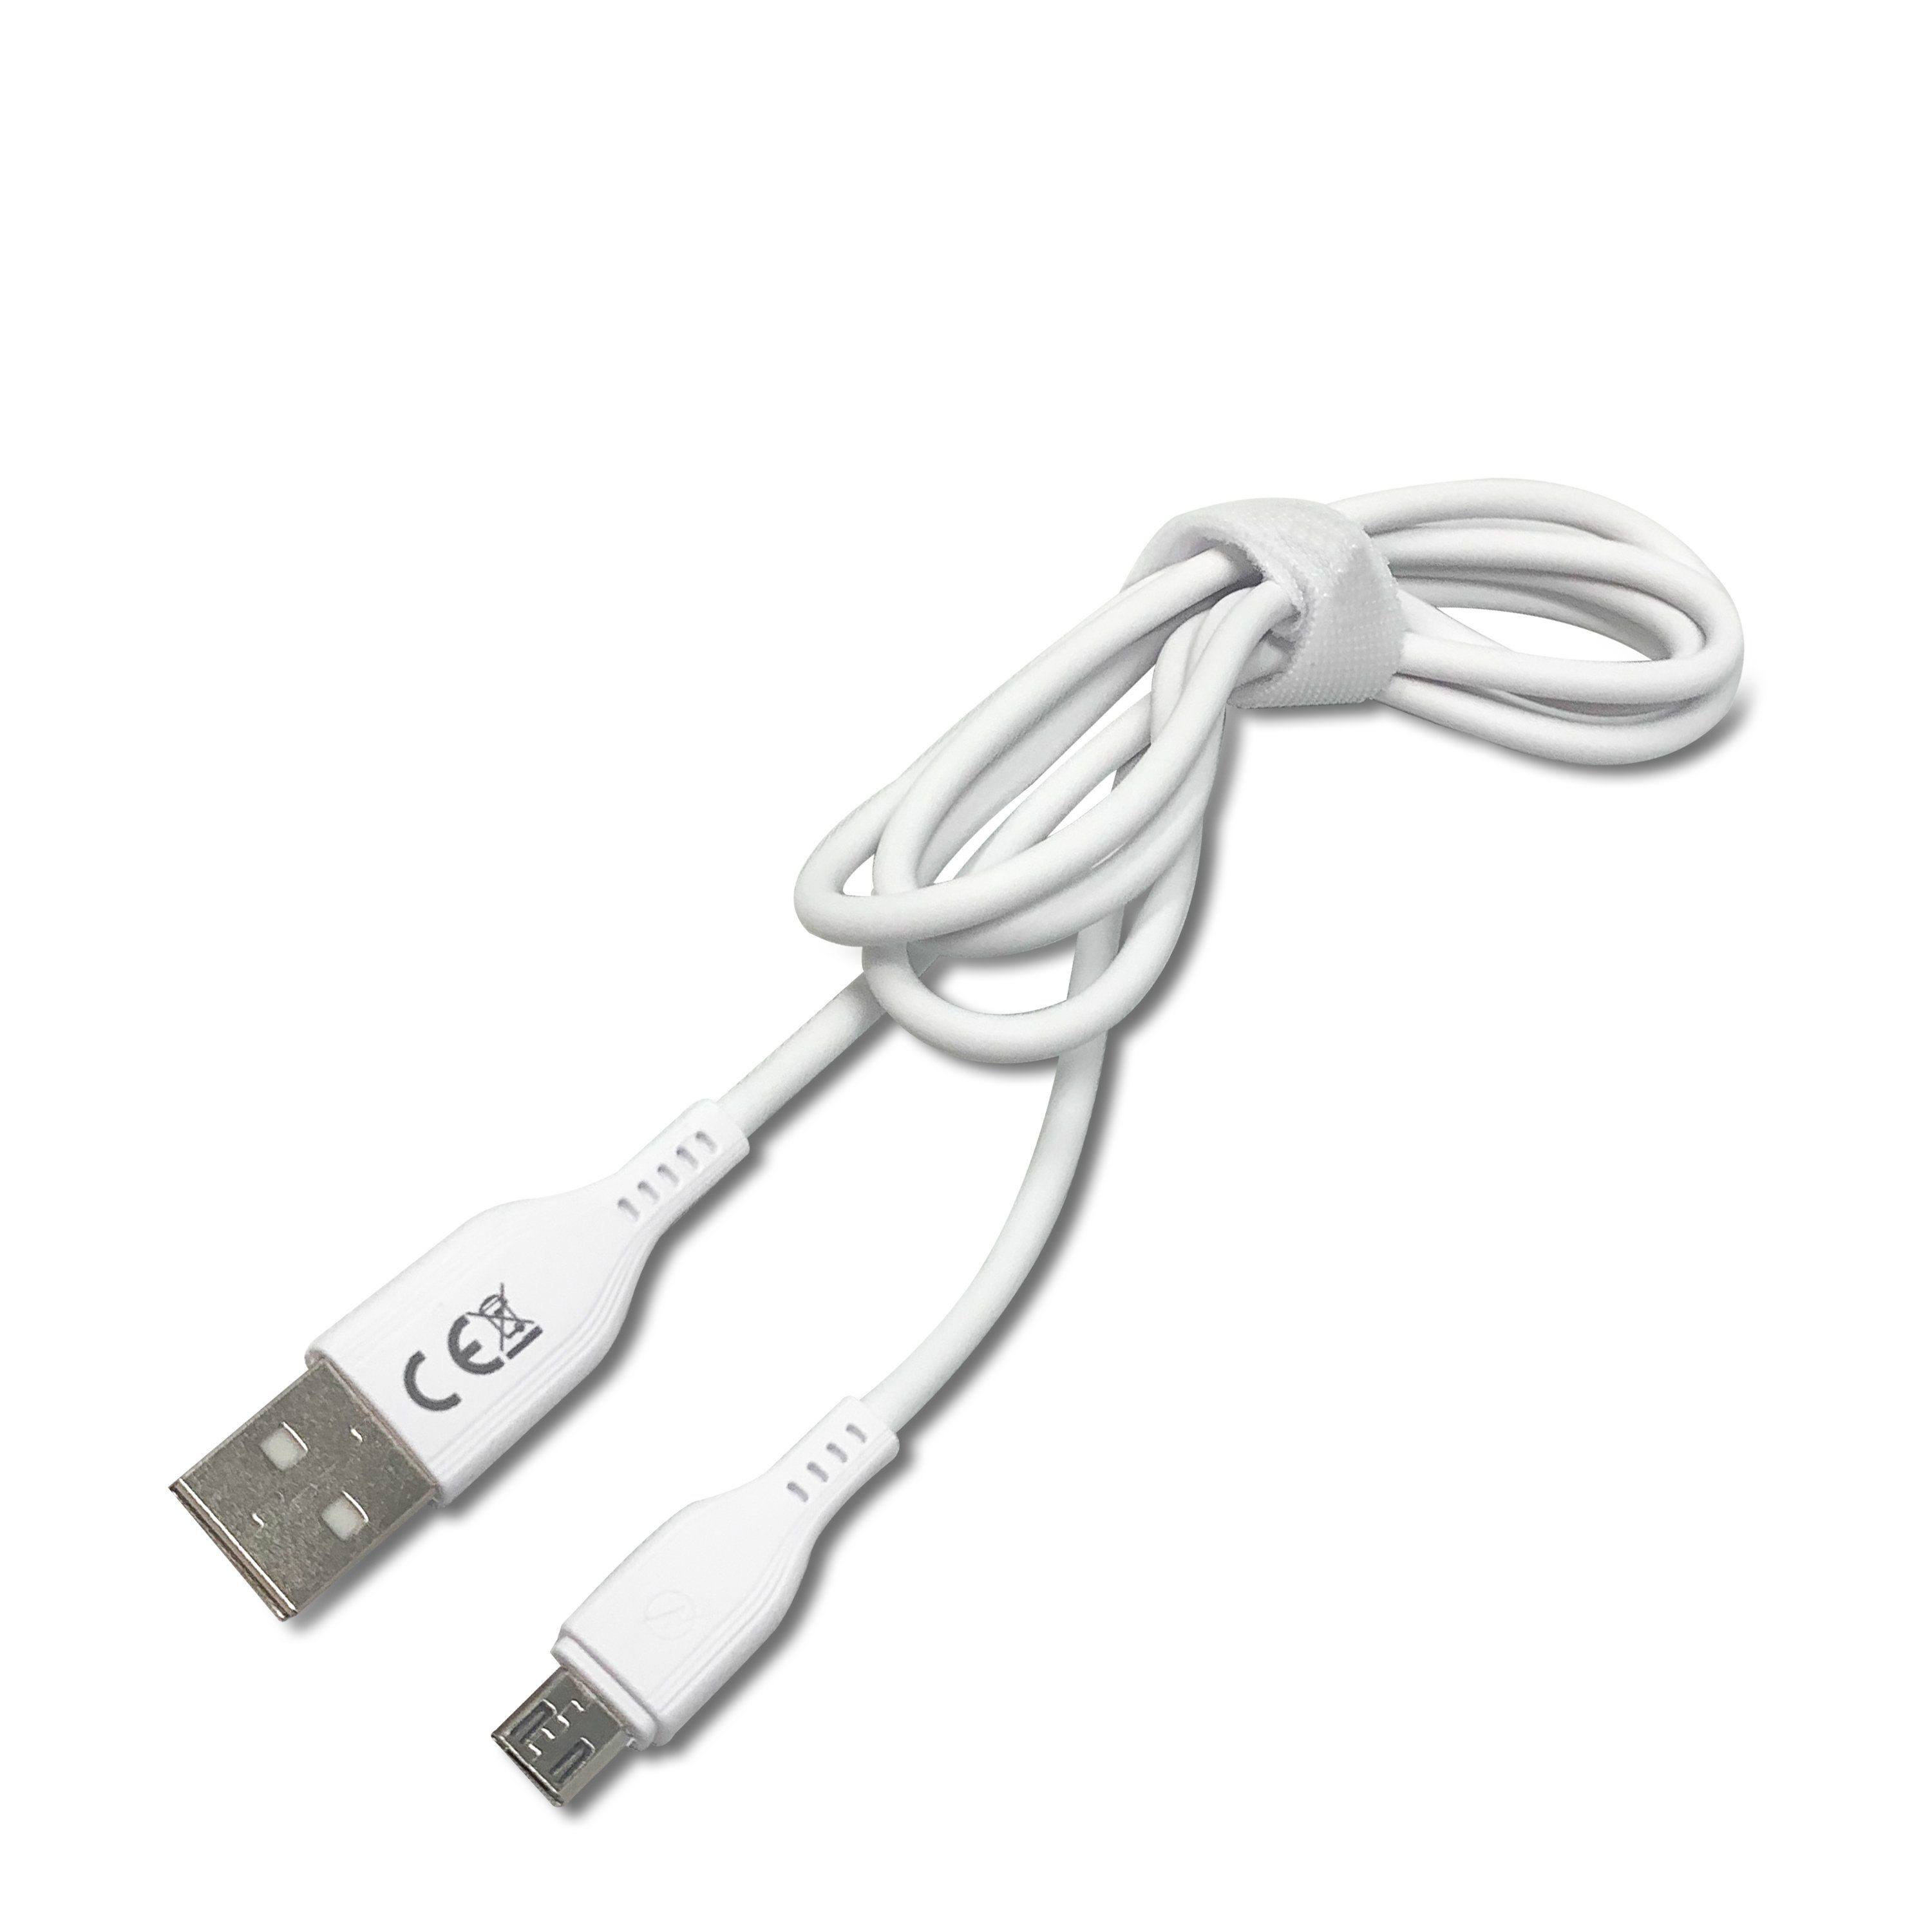 H-basics »Fast Charge Micro USB Ladekabel - Schnellladekabel,  Datenübertragung, Galaxy S7, S6, S5, J7 (2018), J6, J5, Huawei P Smart, P40  Lite E, P10 Lite, PS4 Kontroller« USB-Kabel online kaufen | OTTO